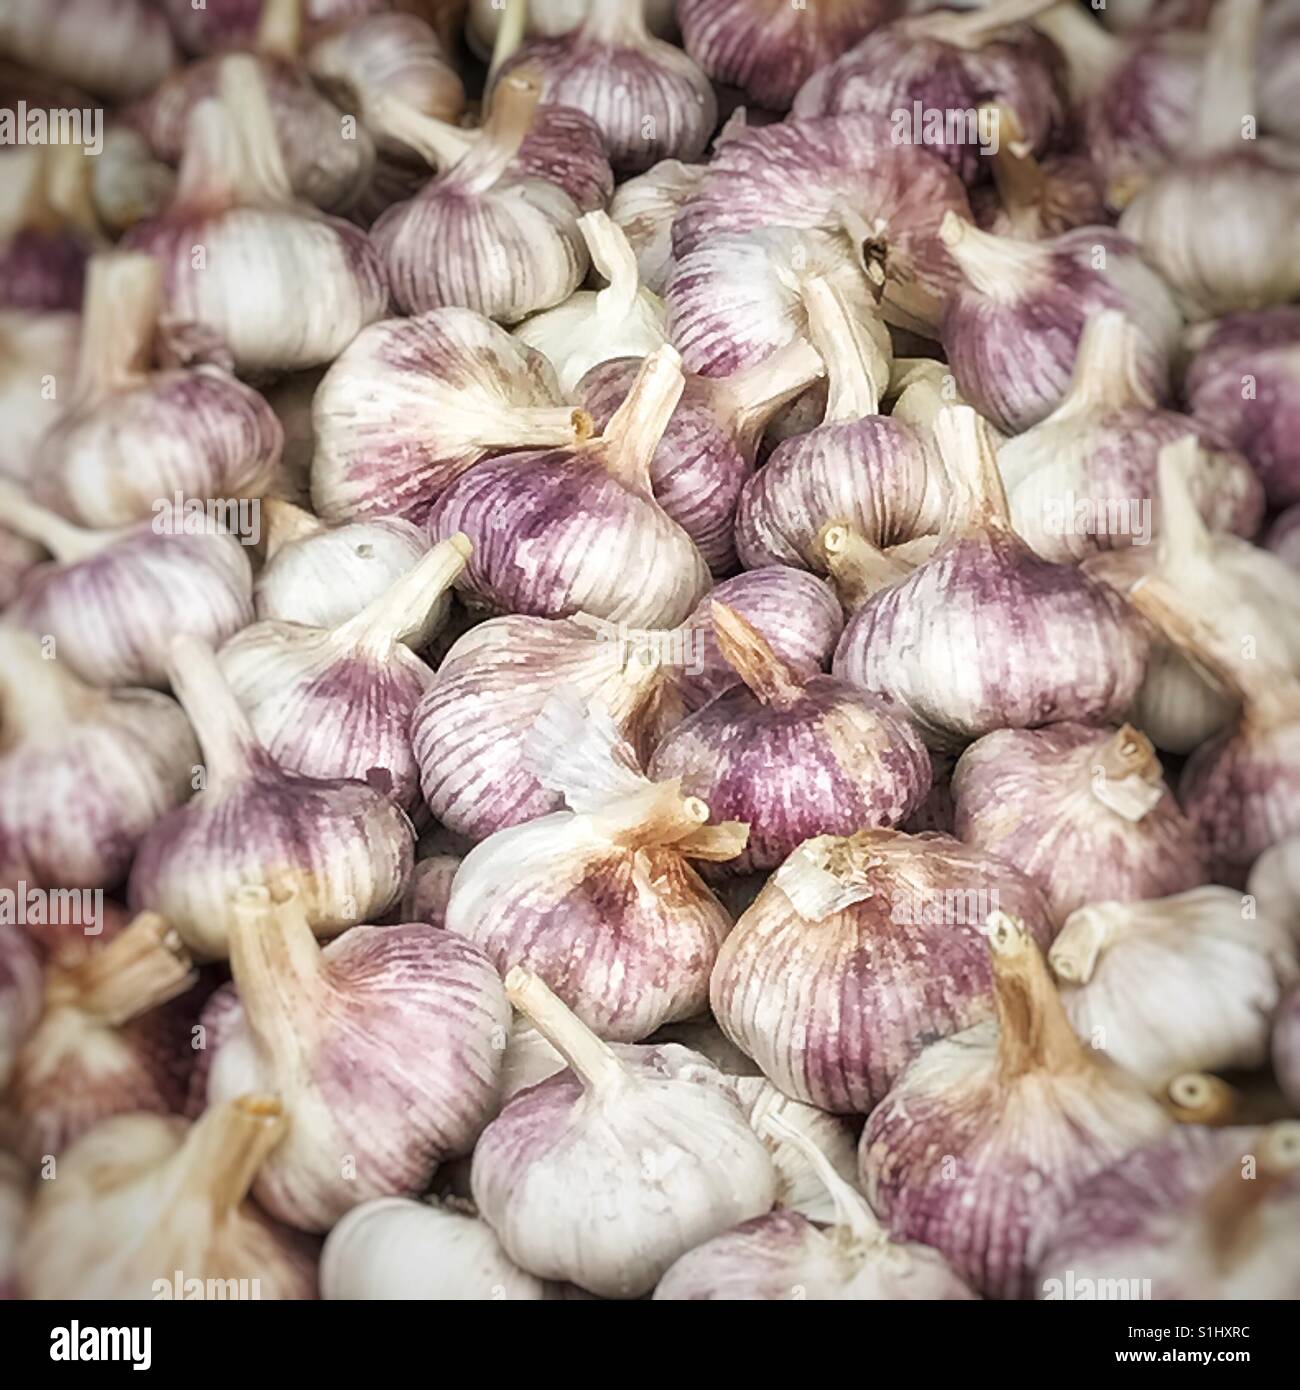 Fresh garlic bulbs on display for sale Stock Photo